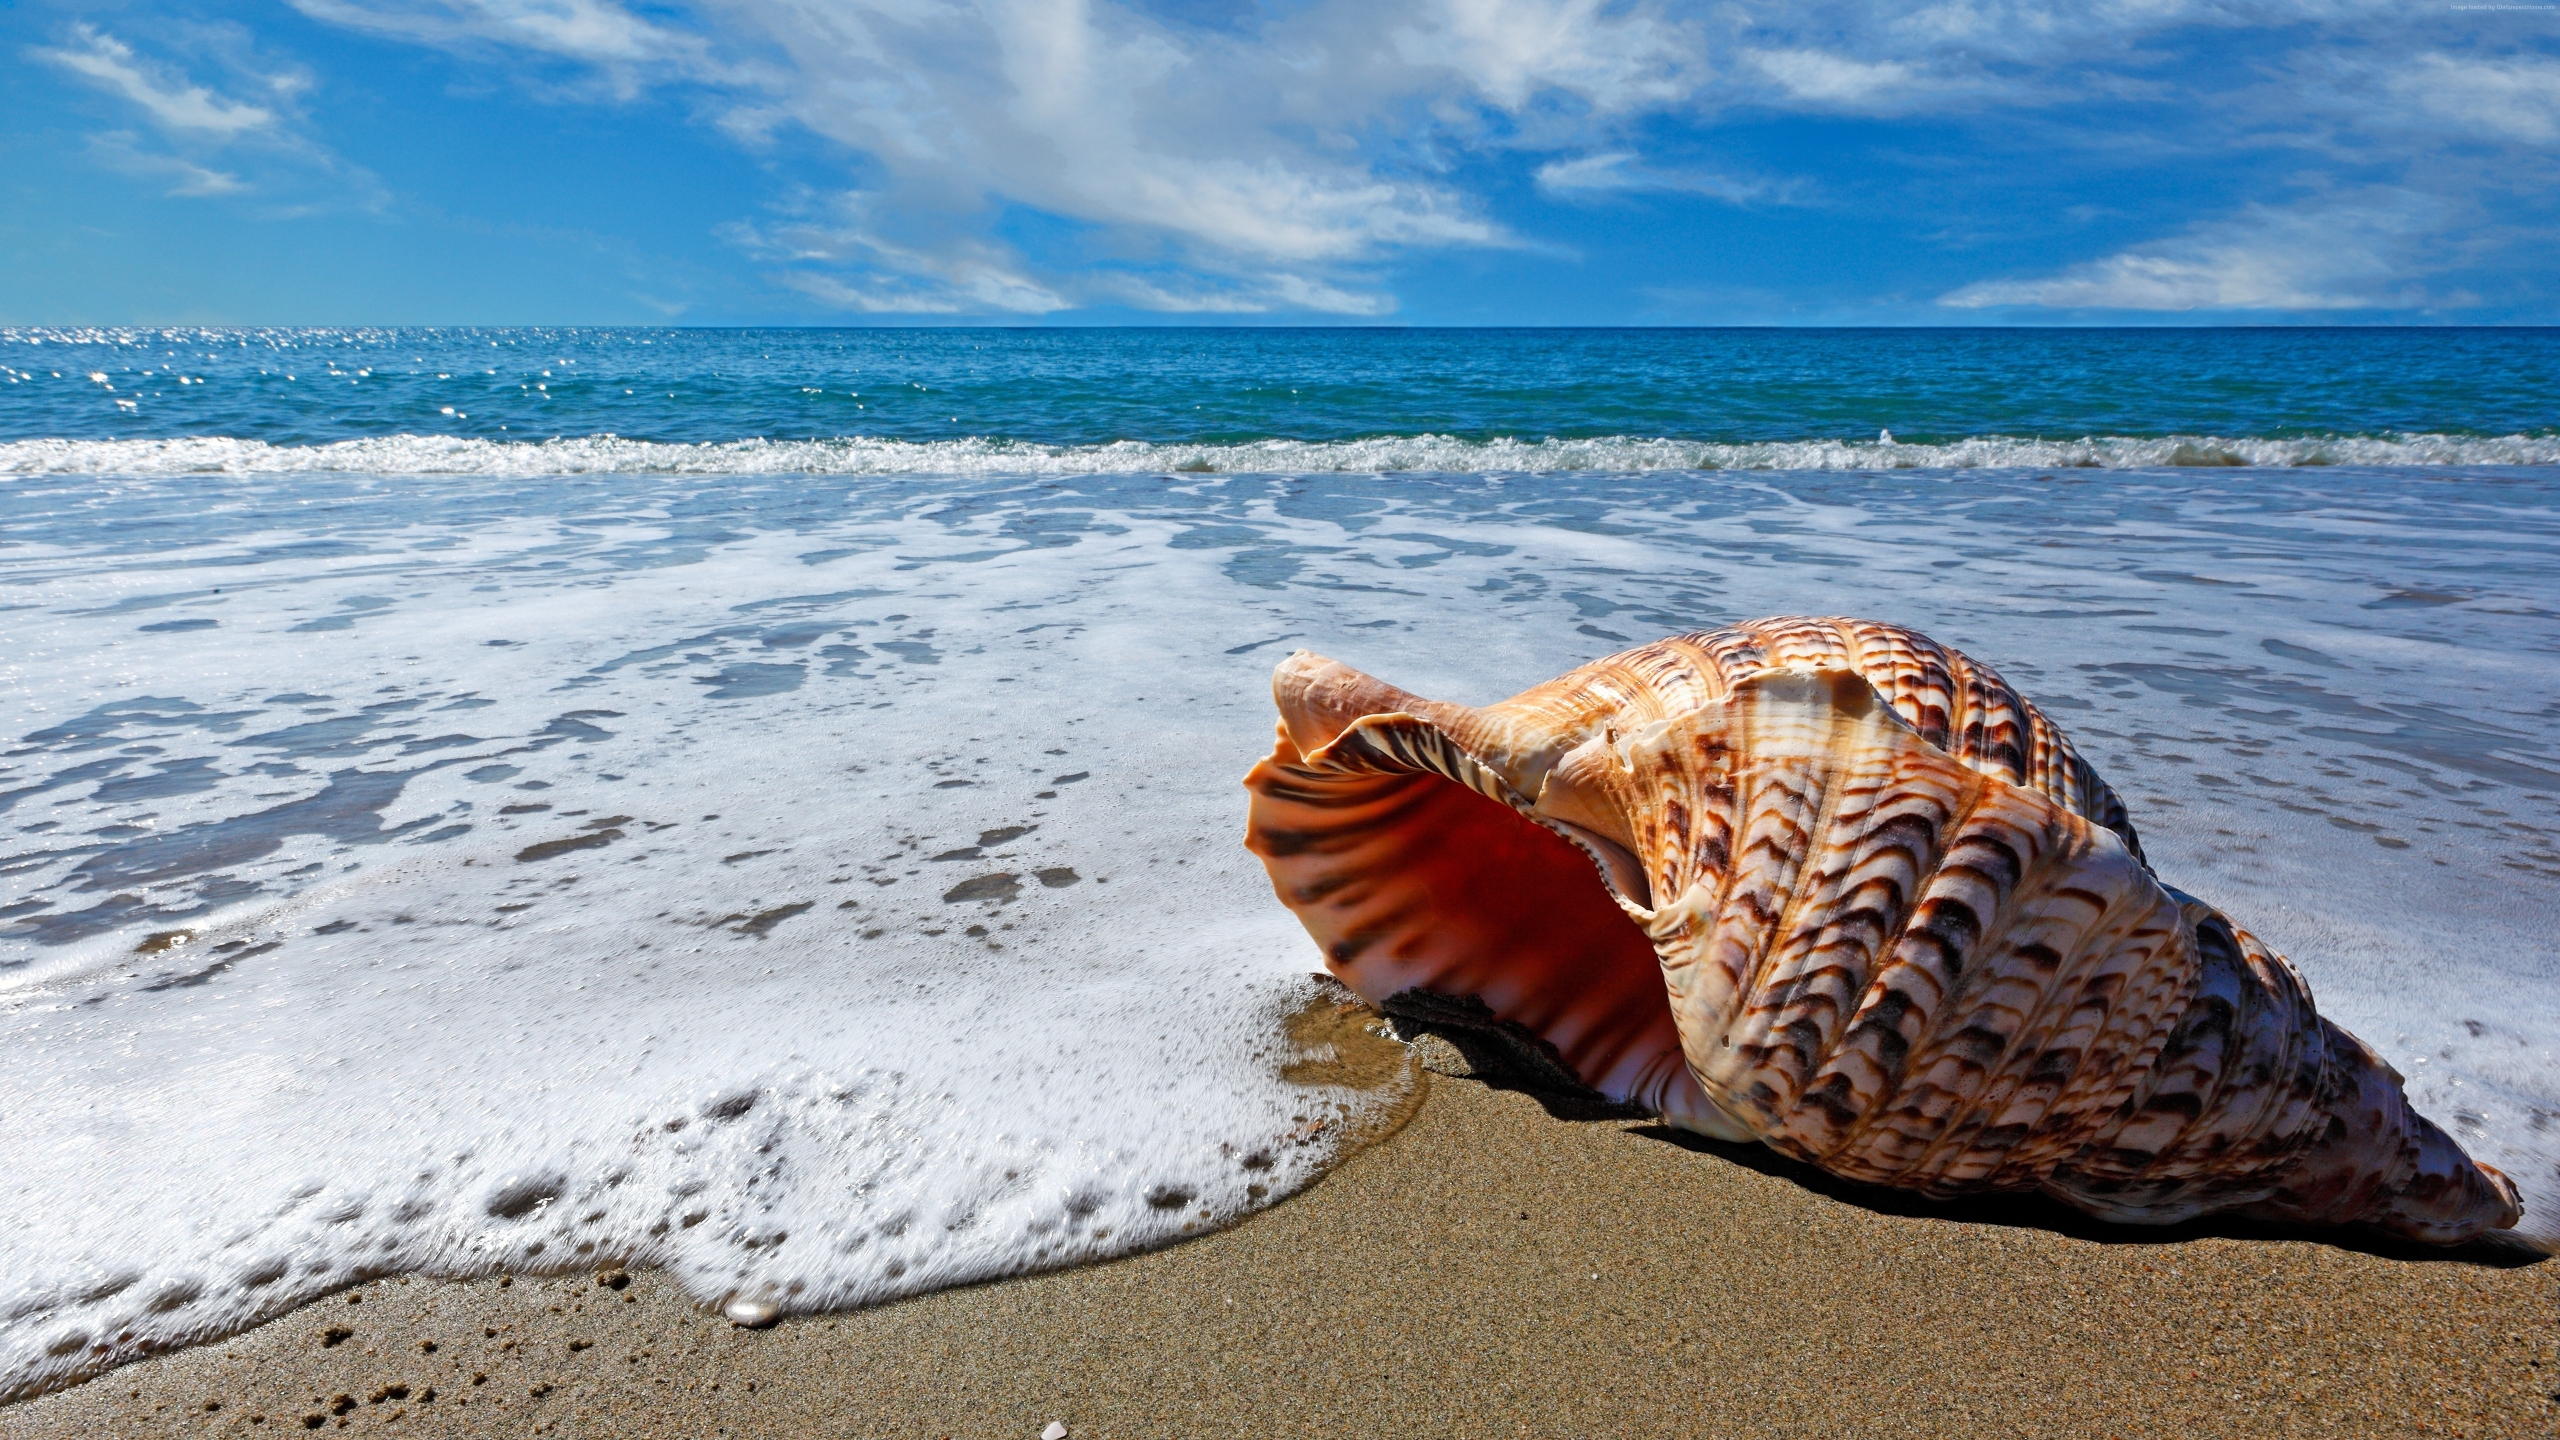 Sea Shell on Sea Shore for 2560 x 1440 HDTV resolution